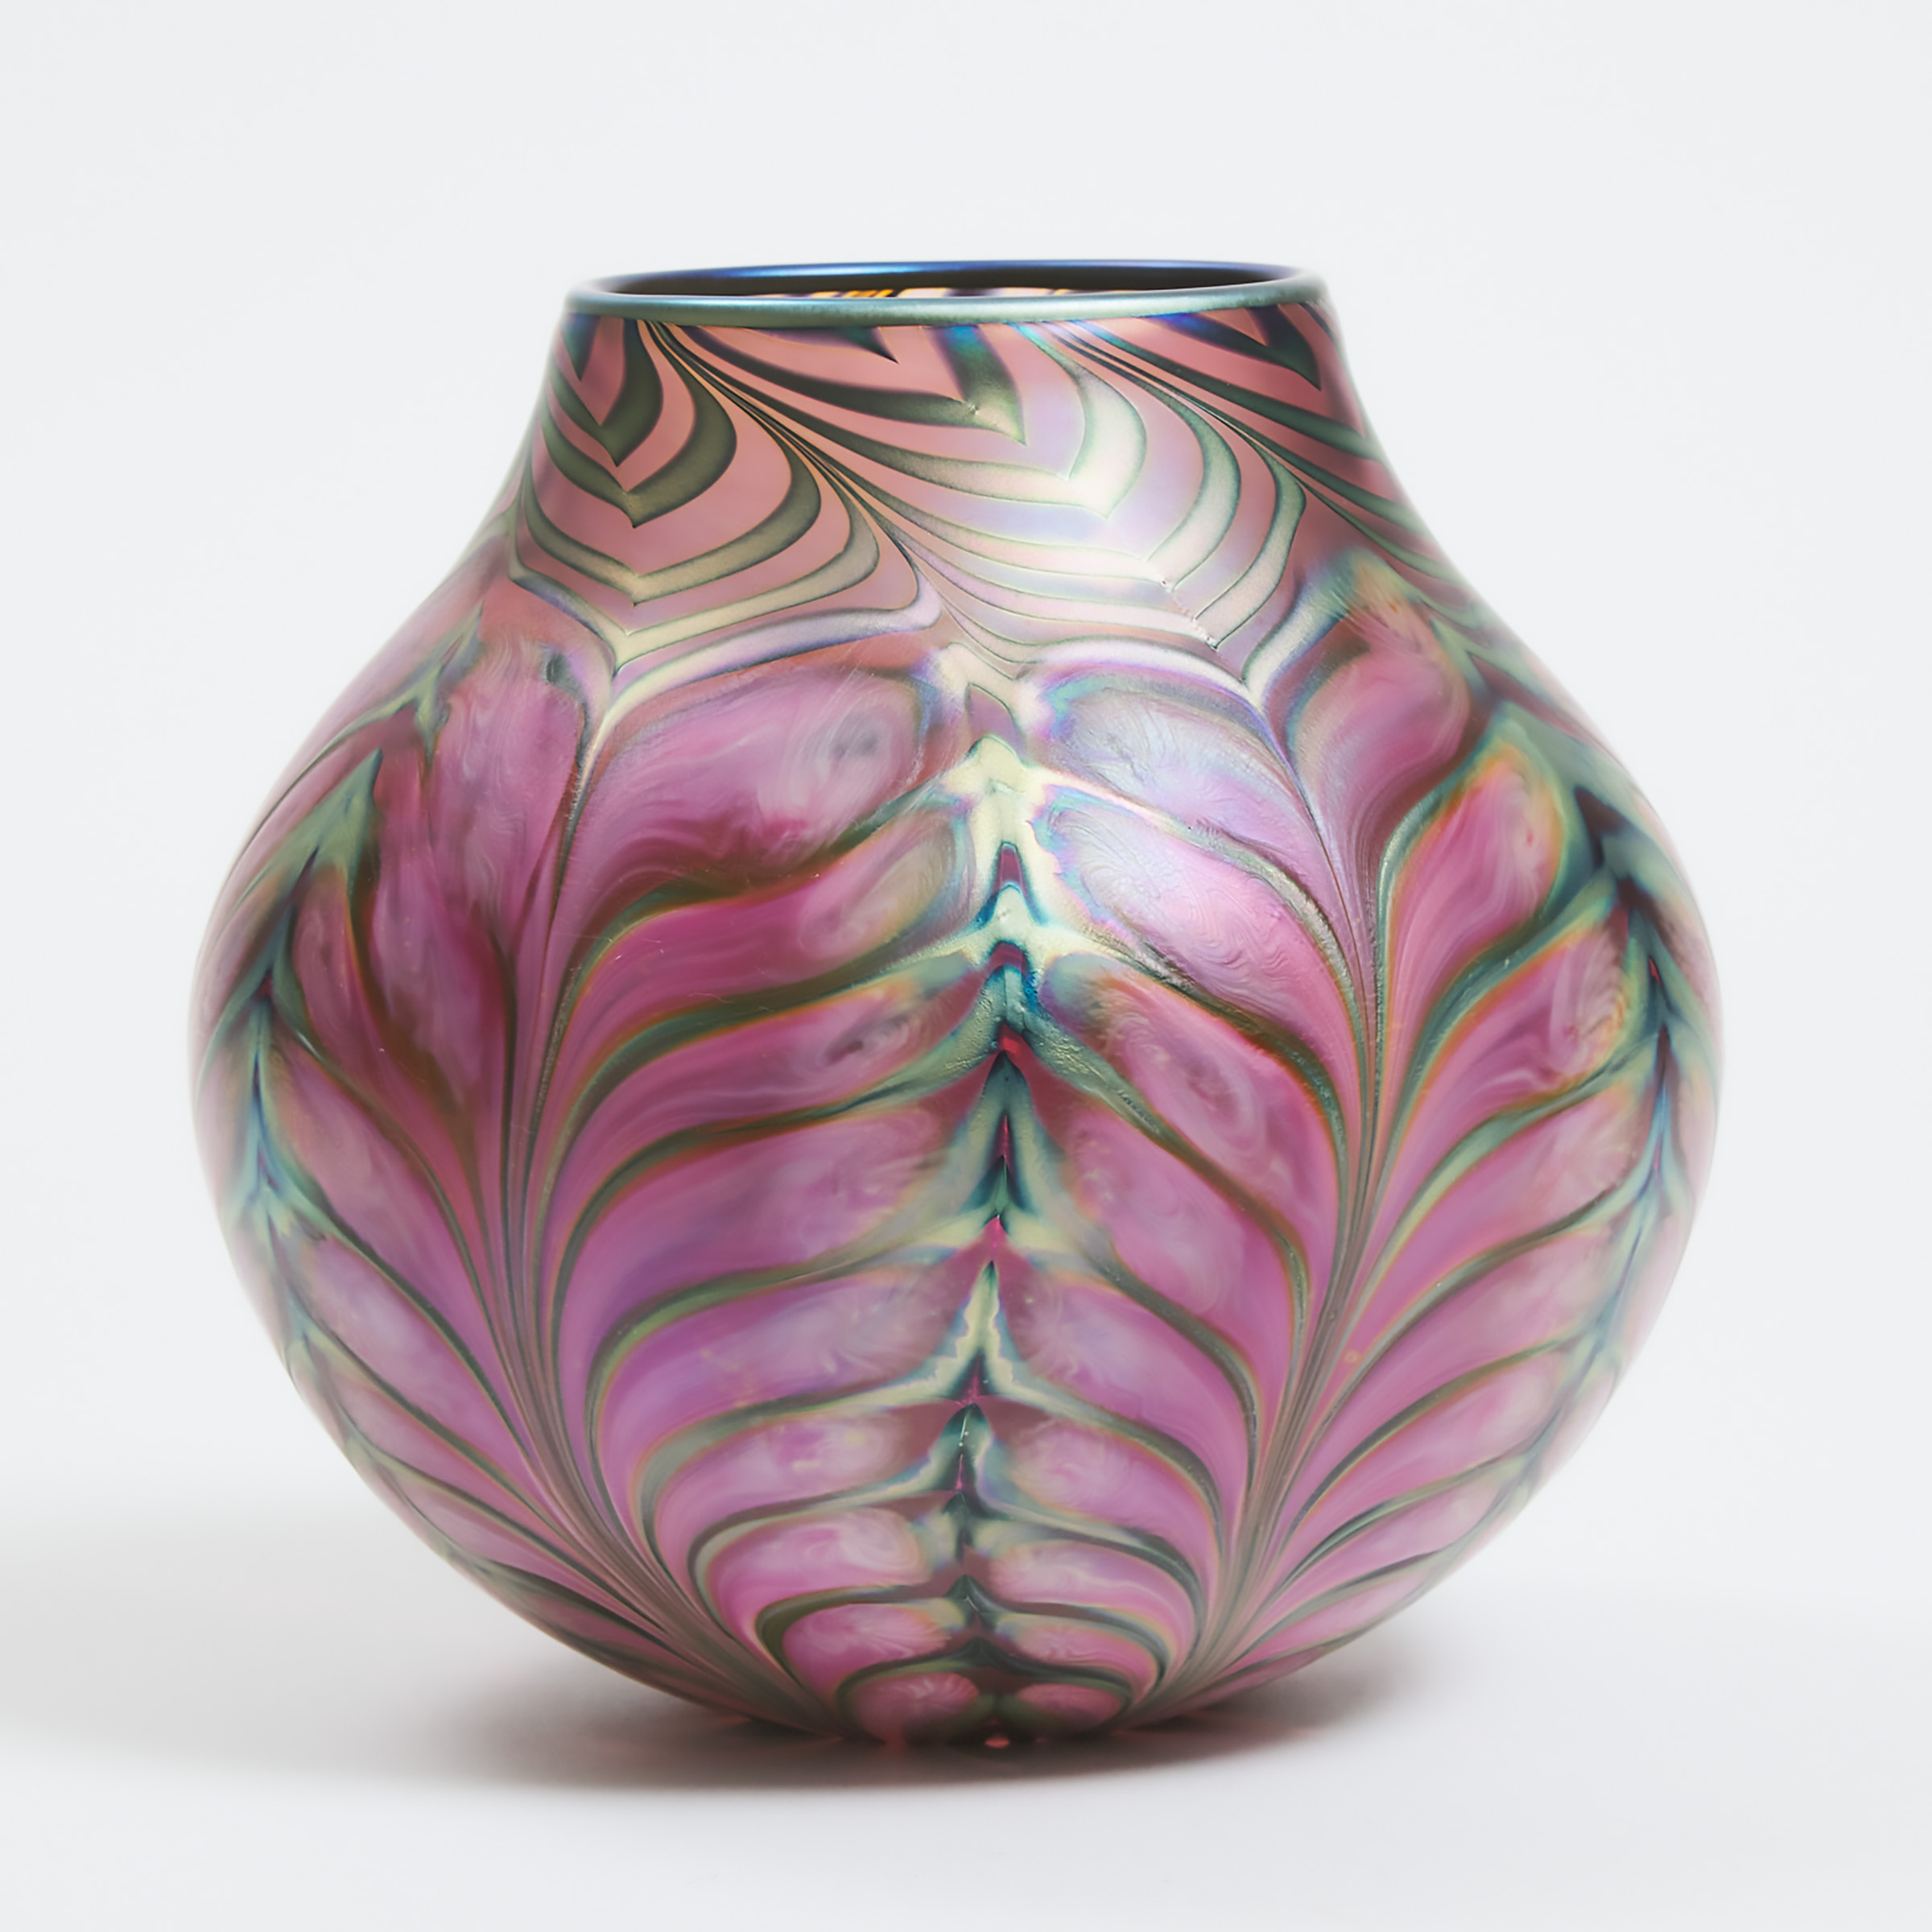 Daniel Lotton (American, b.1963), Iridescent 'Fern' Glass Vase, 1997